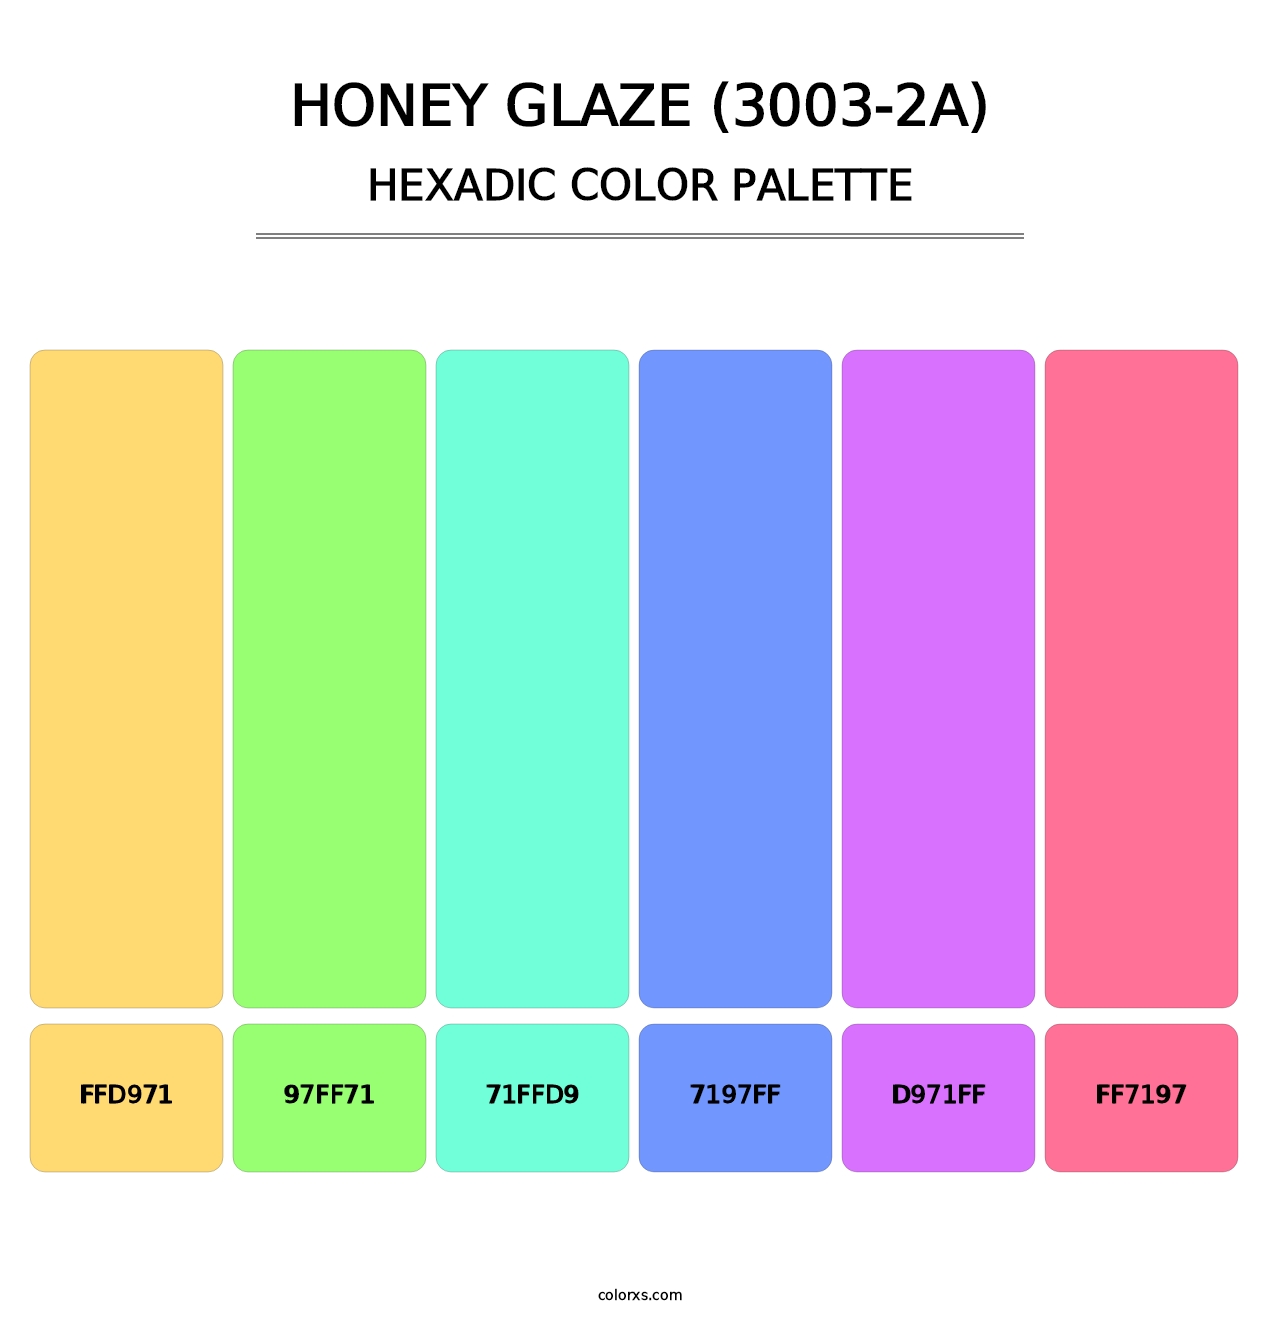 Honey Glaze (3003-2A) - Hexadic Color Palette